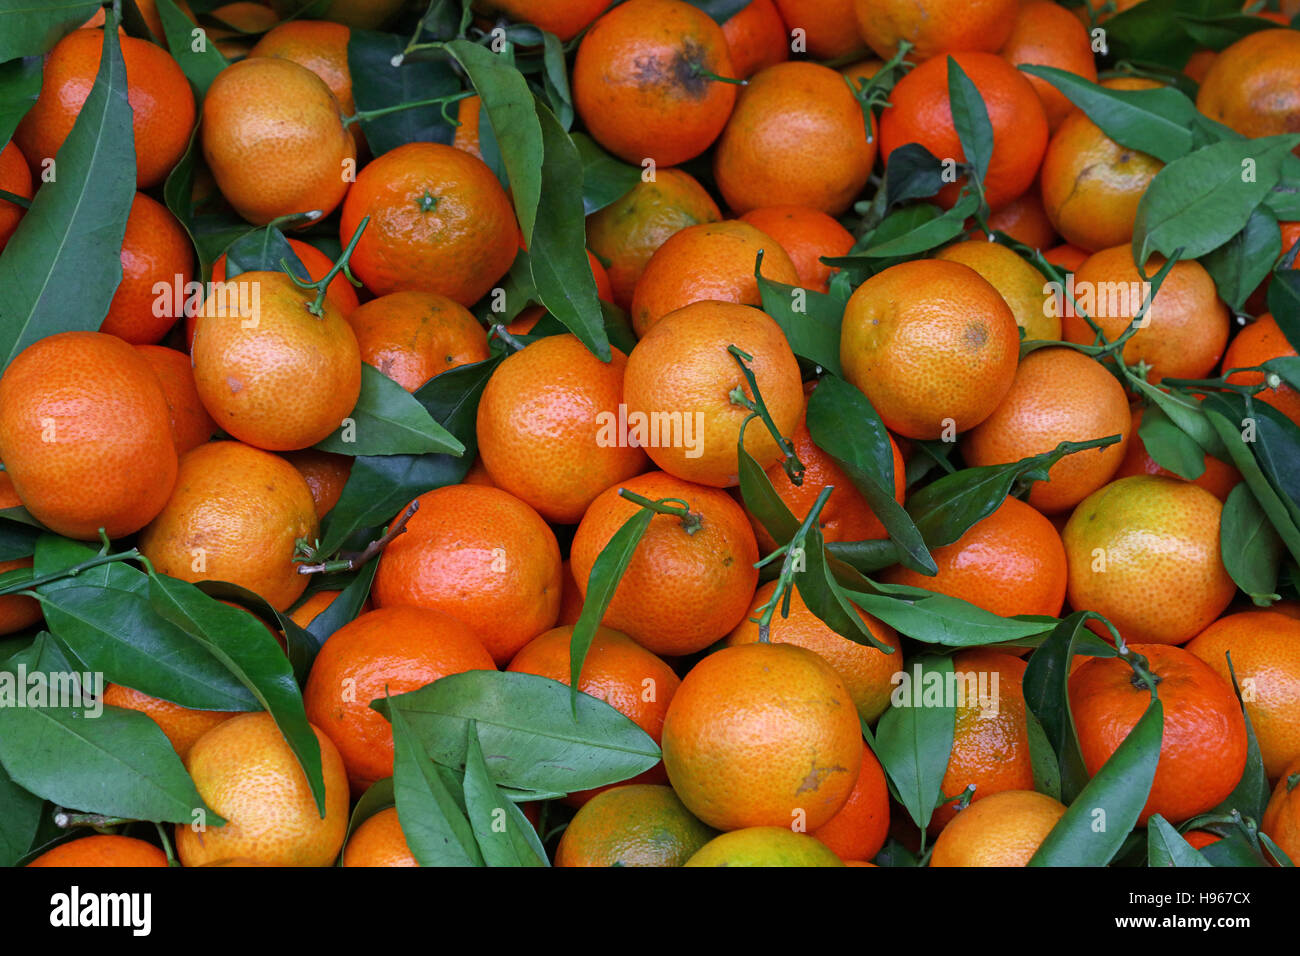 https://c8.alamy.com/comp/H967CX/fresh-ripe-mandarin-oranges-clementine-tangerine-with-green-leaves-H967CX.jpg